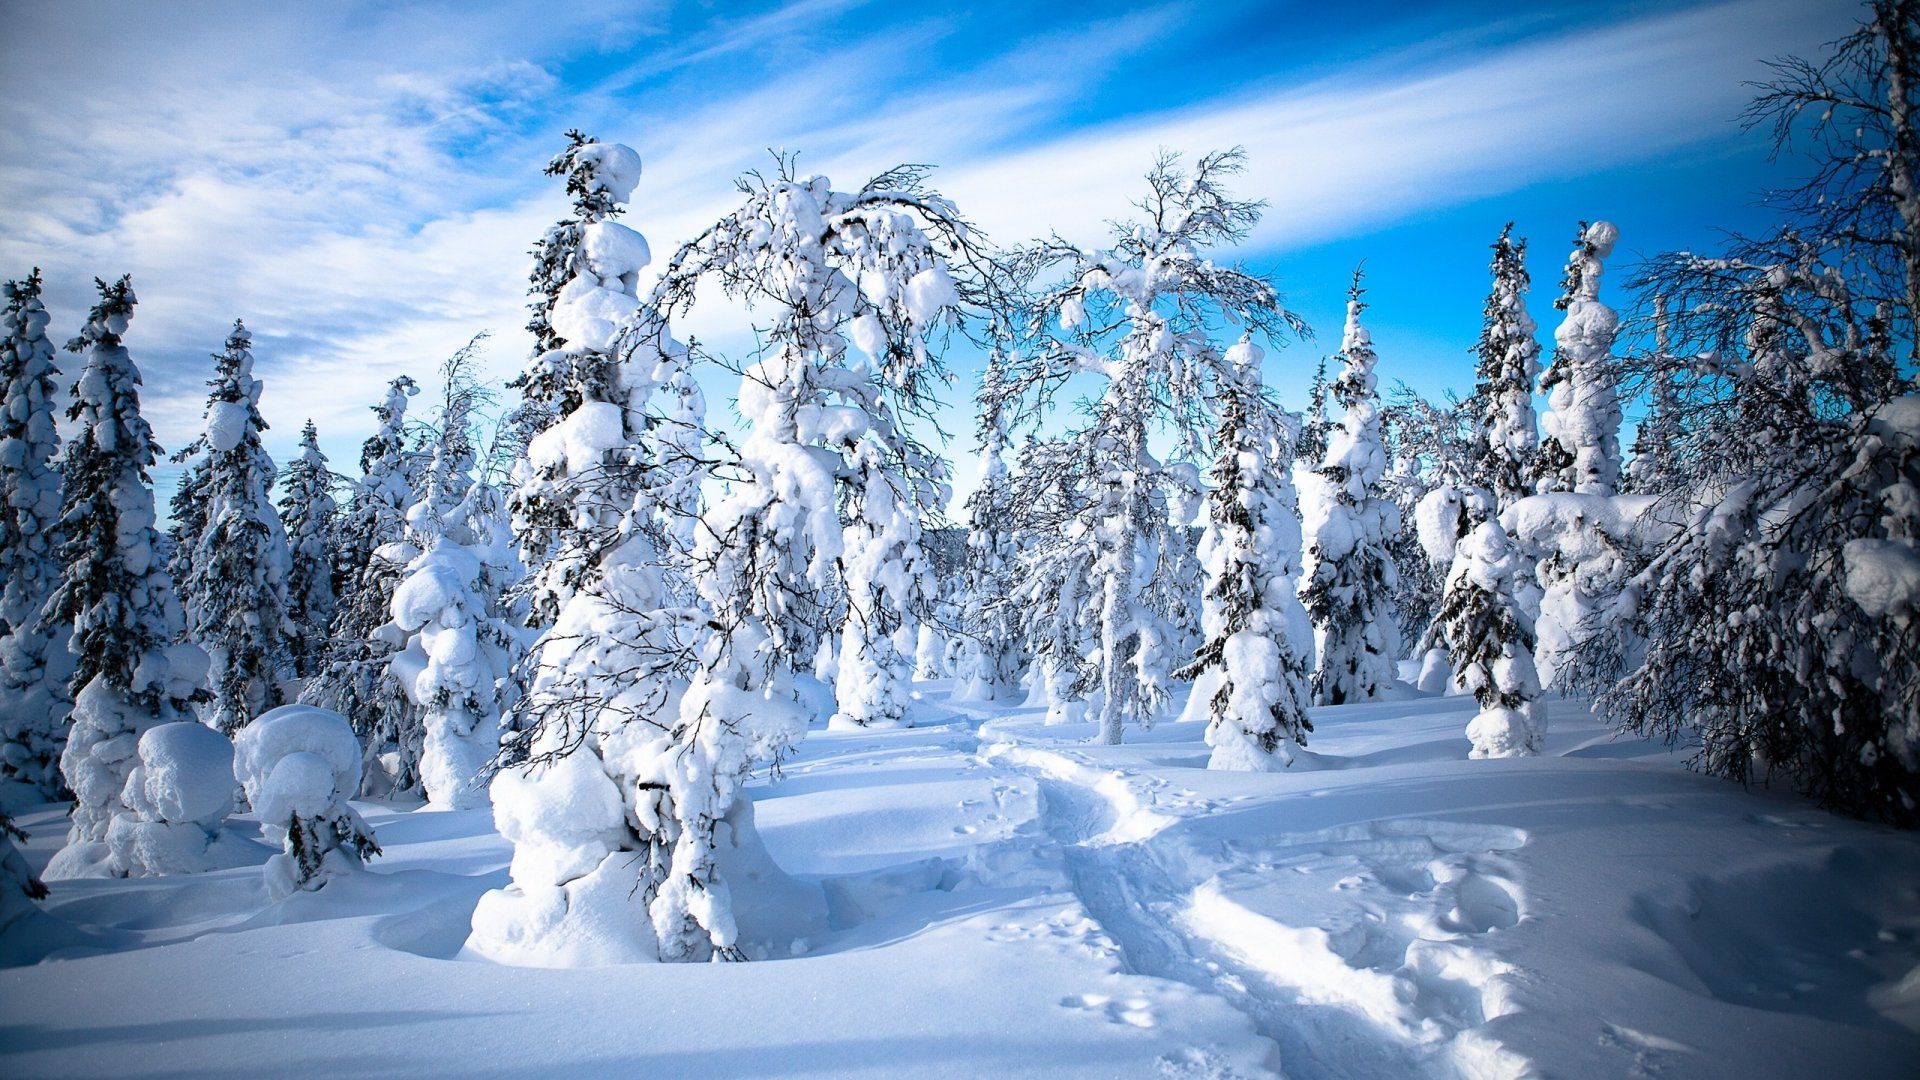 Download desktop wallpaper Lapland Finland Winter Snow Forest Trees 1920x1080